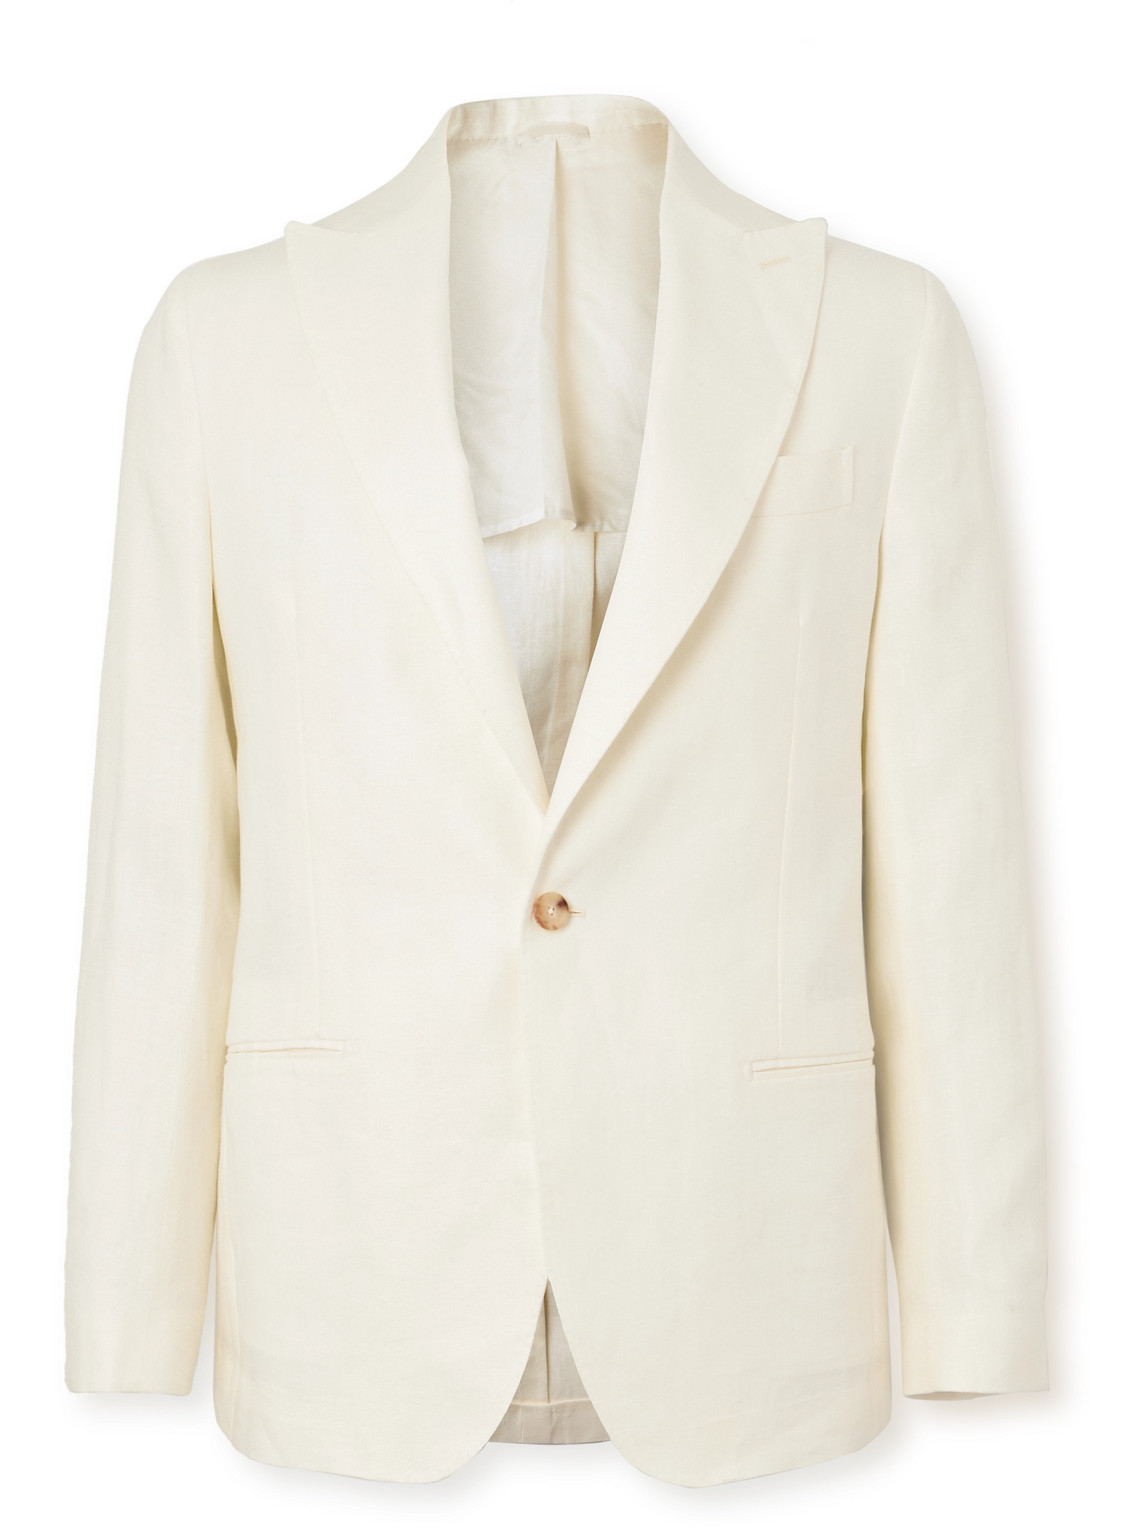 Linen Suit Blazer